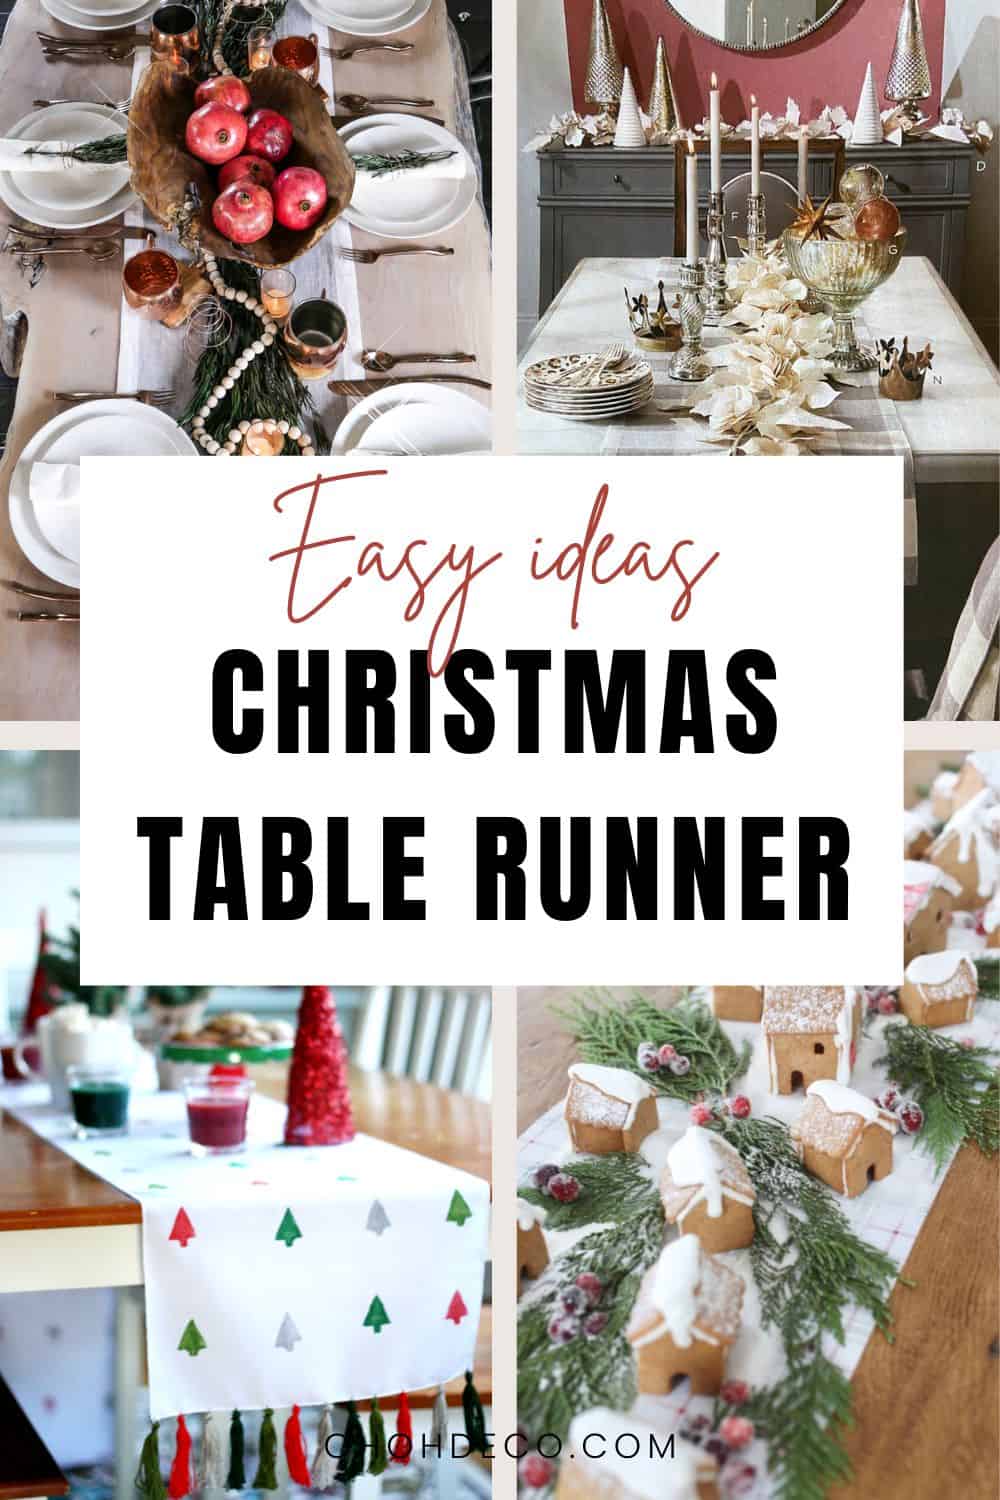 Christmas table runner ideas